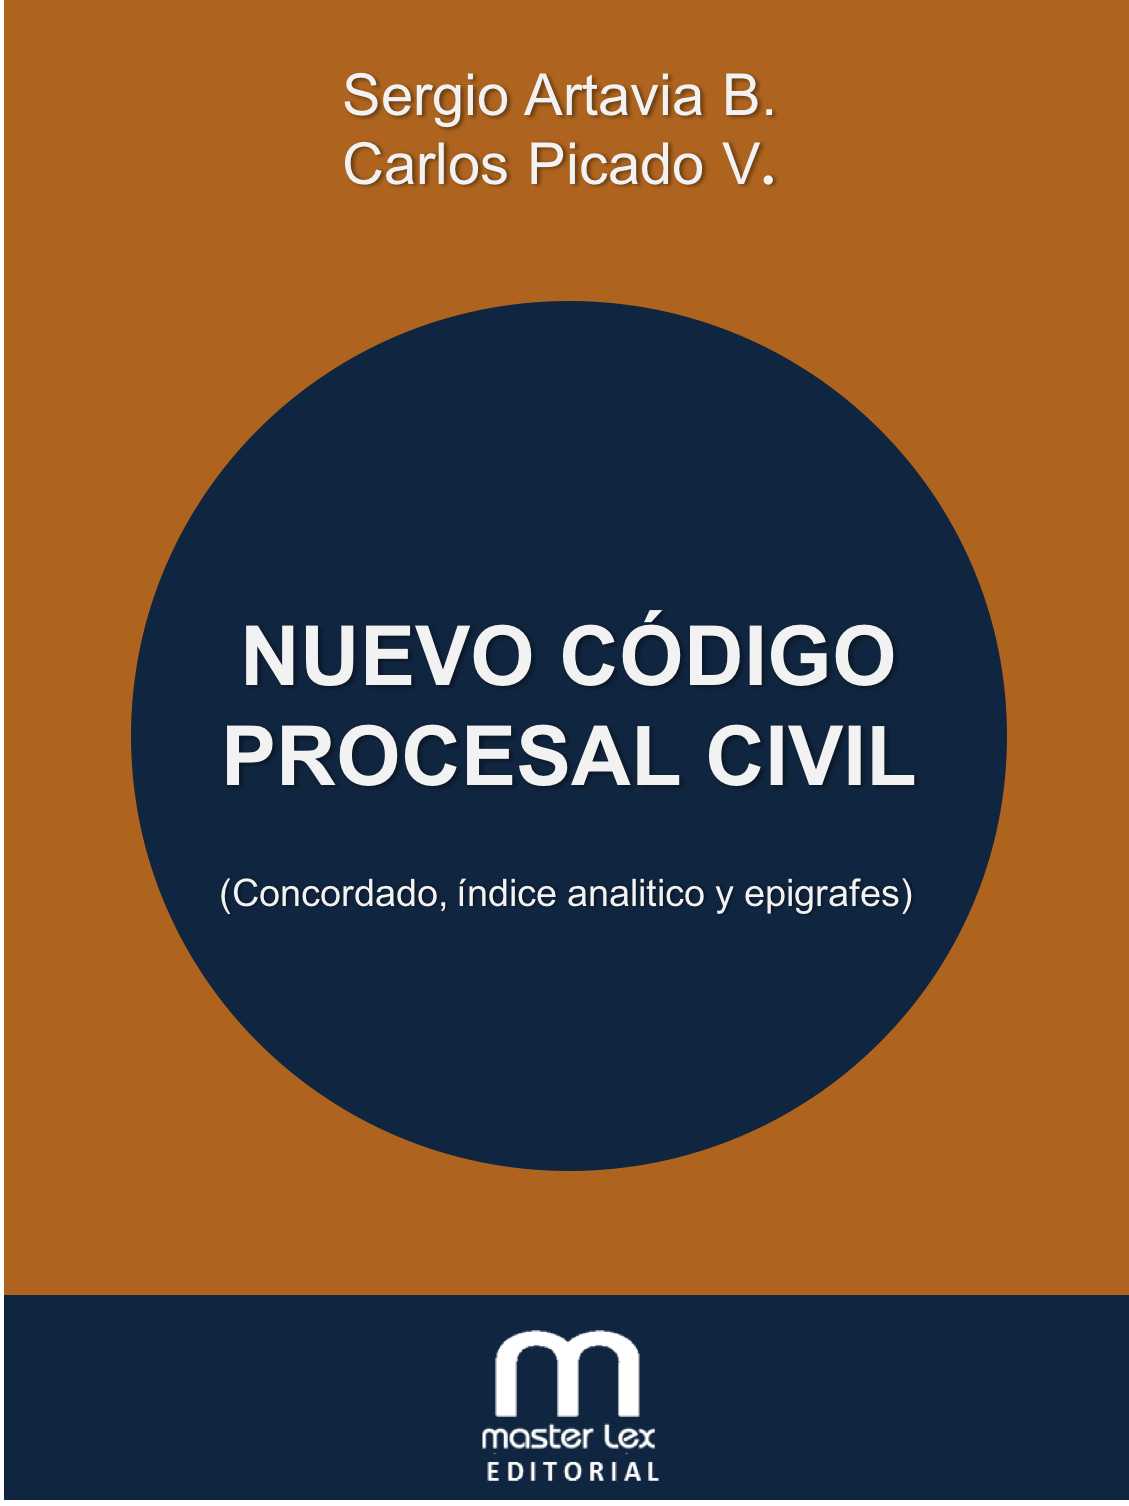 Nuevo Código Procesal Civil